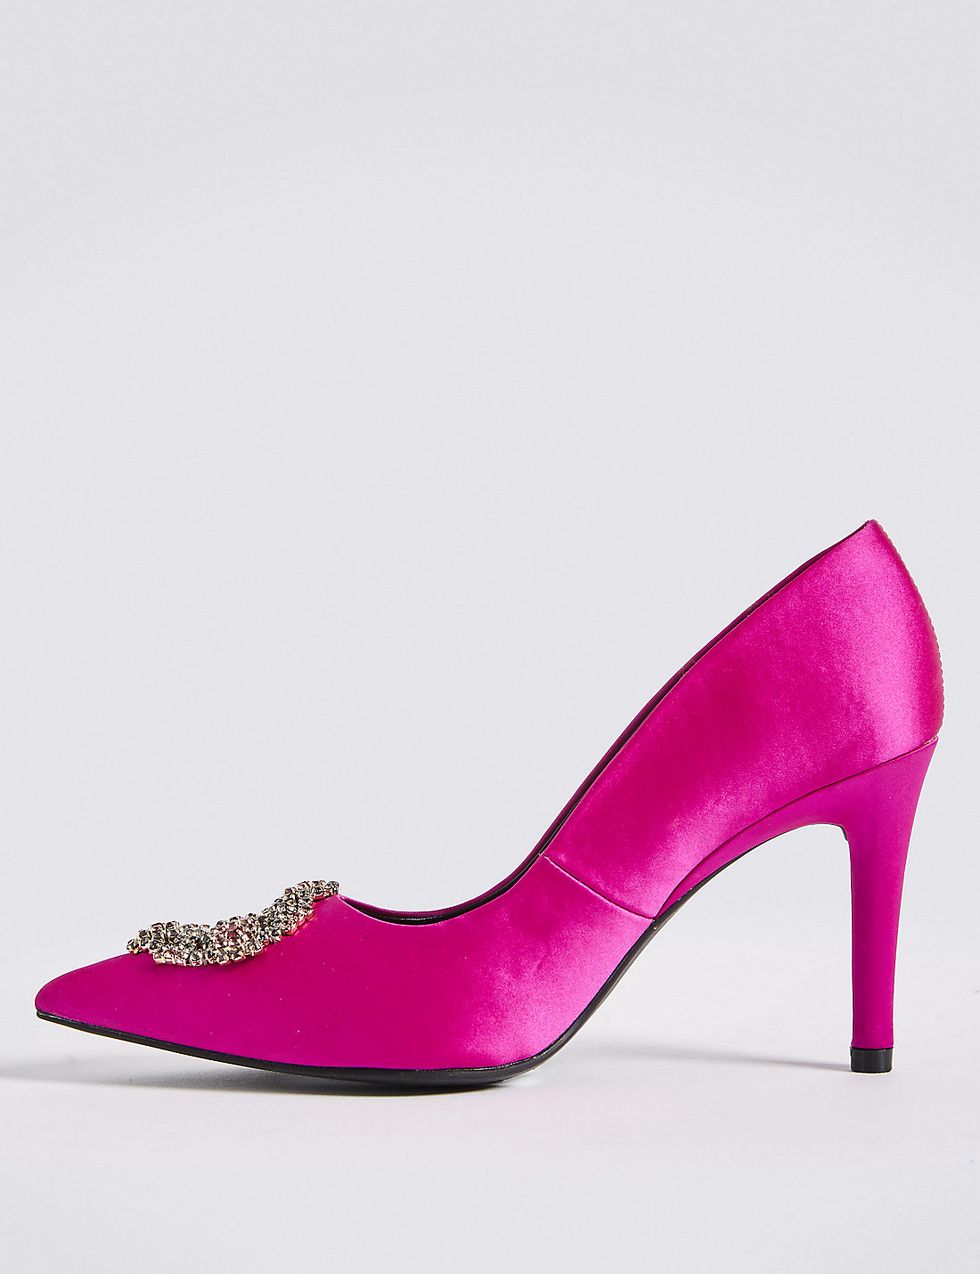 Footwear, High heels, Pink, Magenta, Basic pump, Violet, Shoe, Purple, Court shoe, Fashion accessory, 